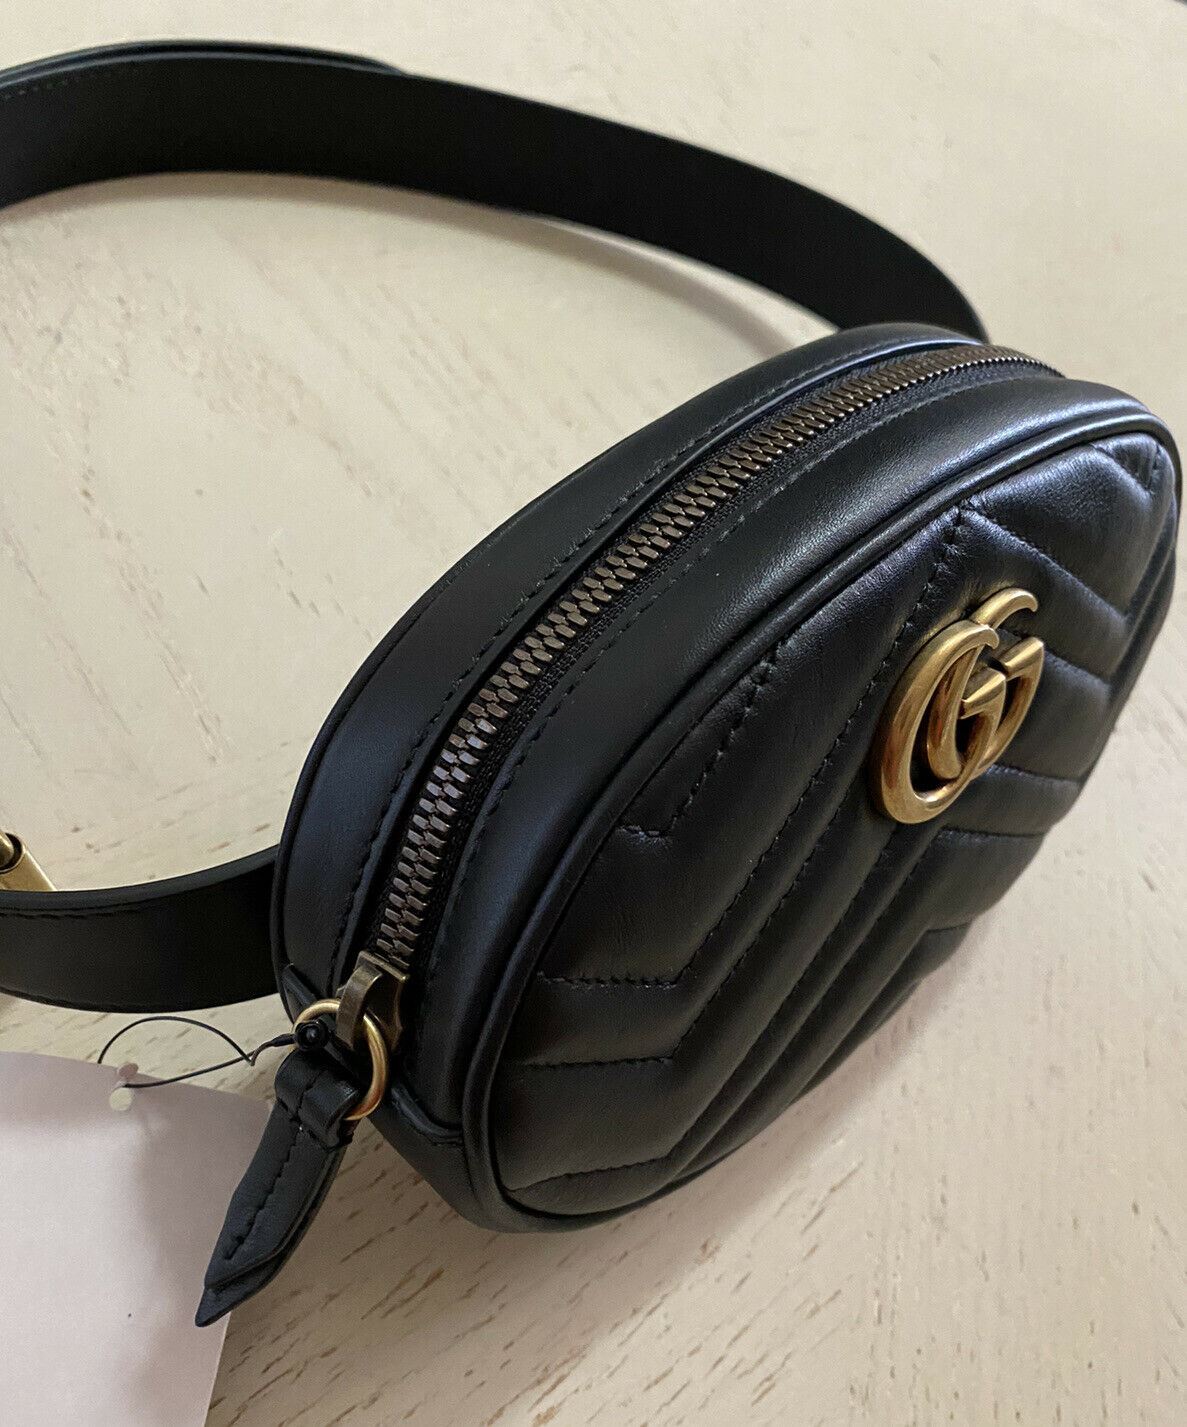 New Gucci GG Marmont Matelasse Leather Belt Bag Black 476434 Size 95/38